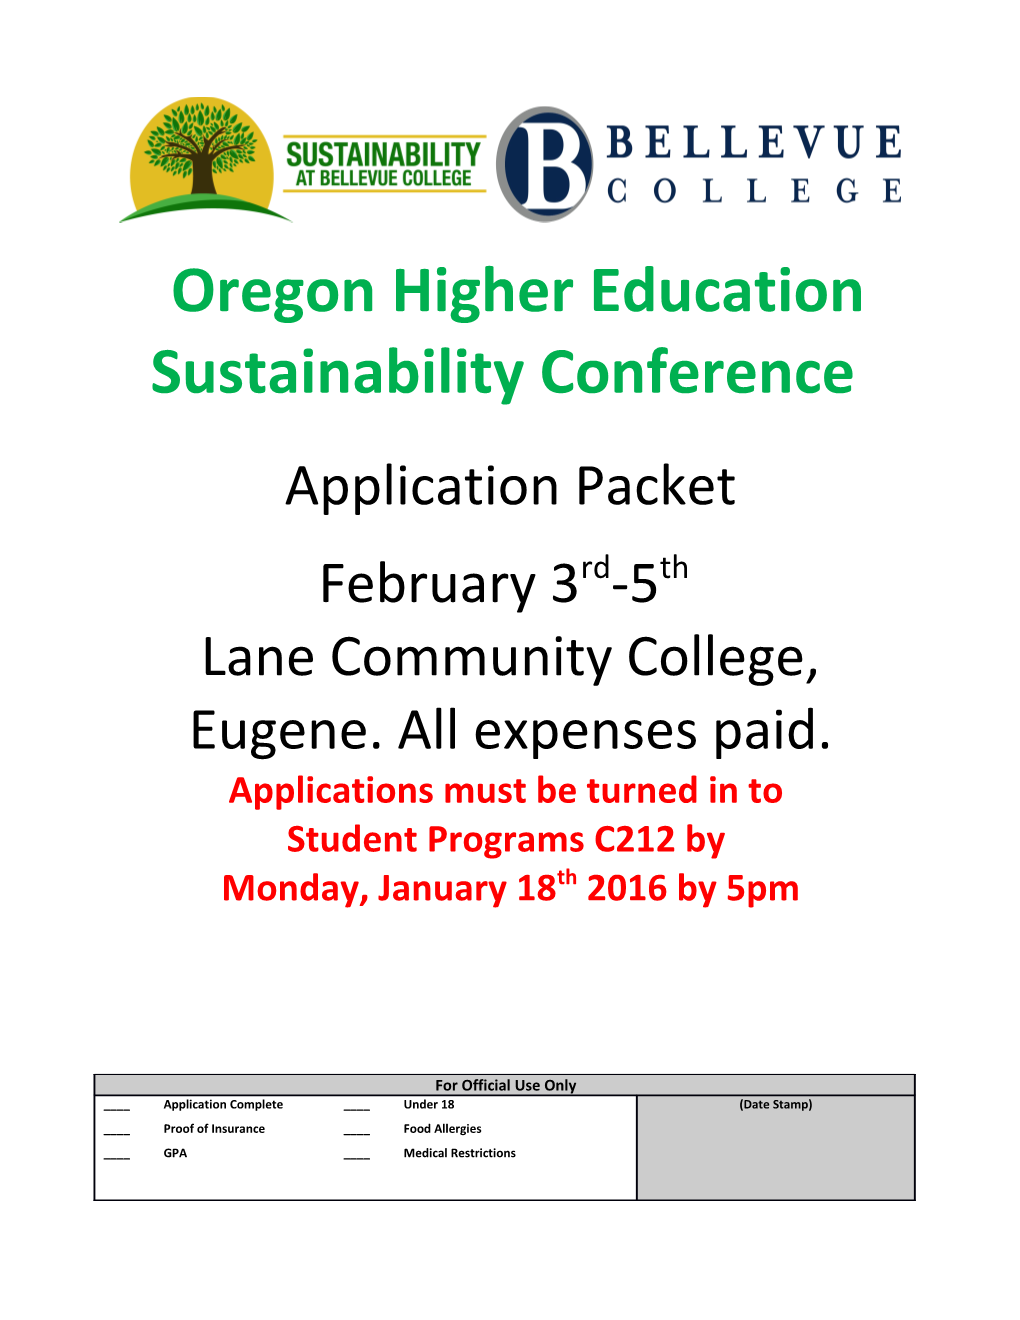 Oregon Higher Education Sustainability Conference